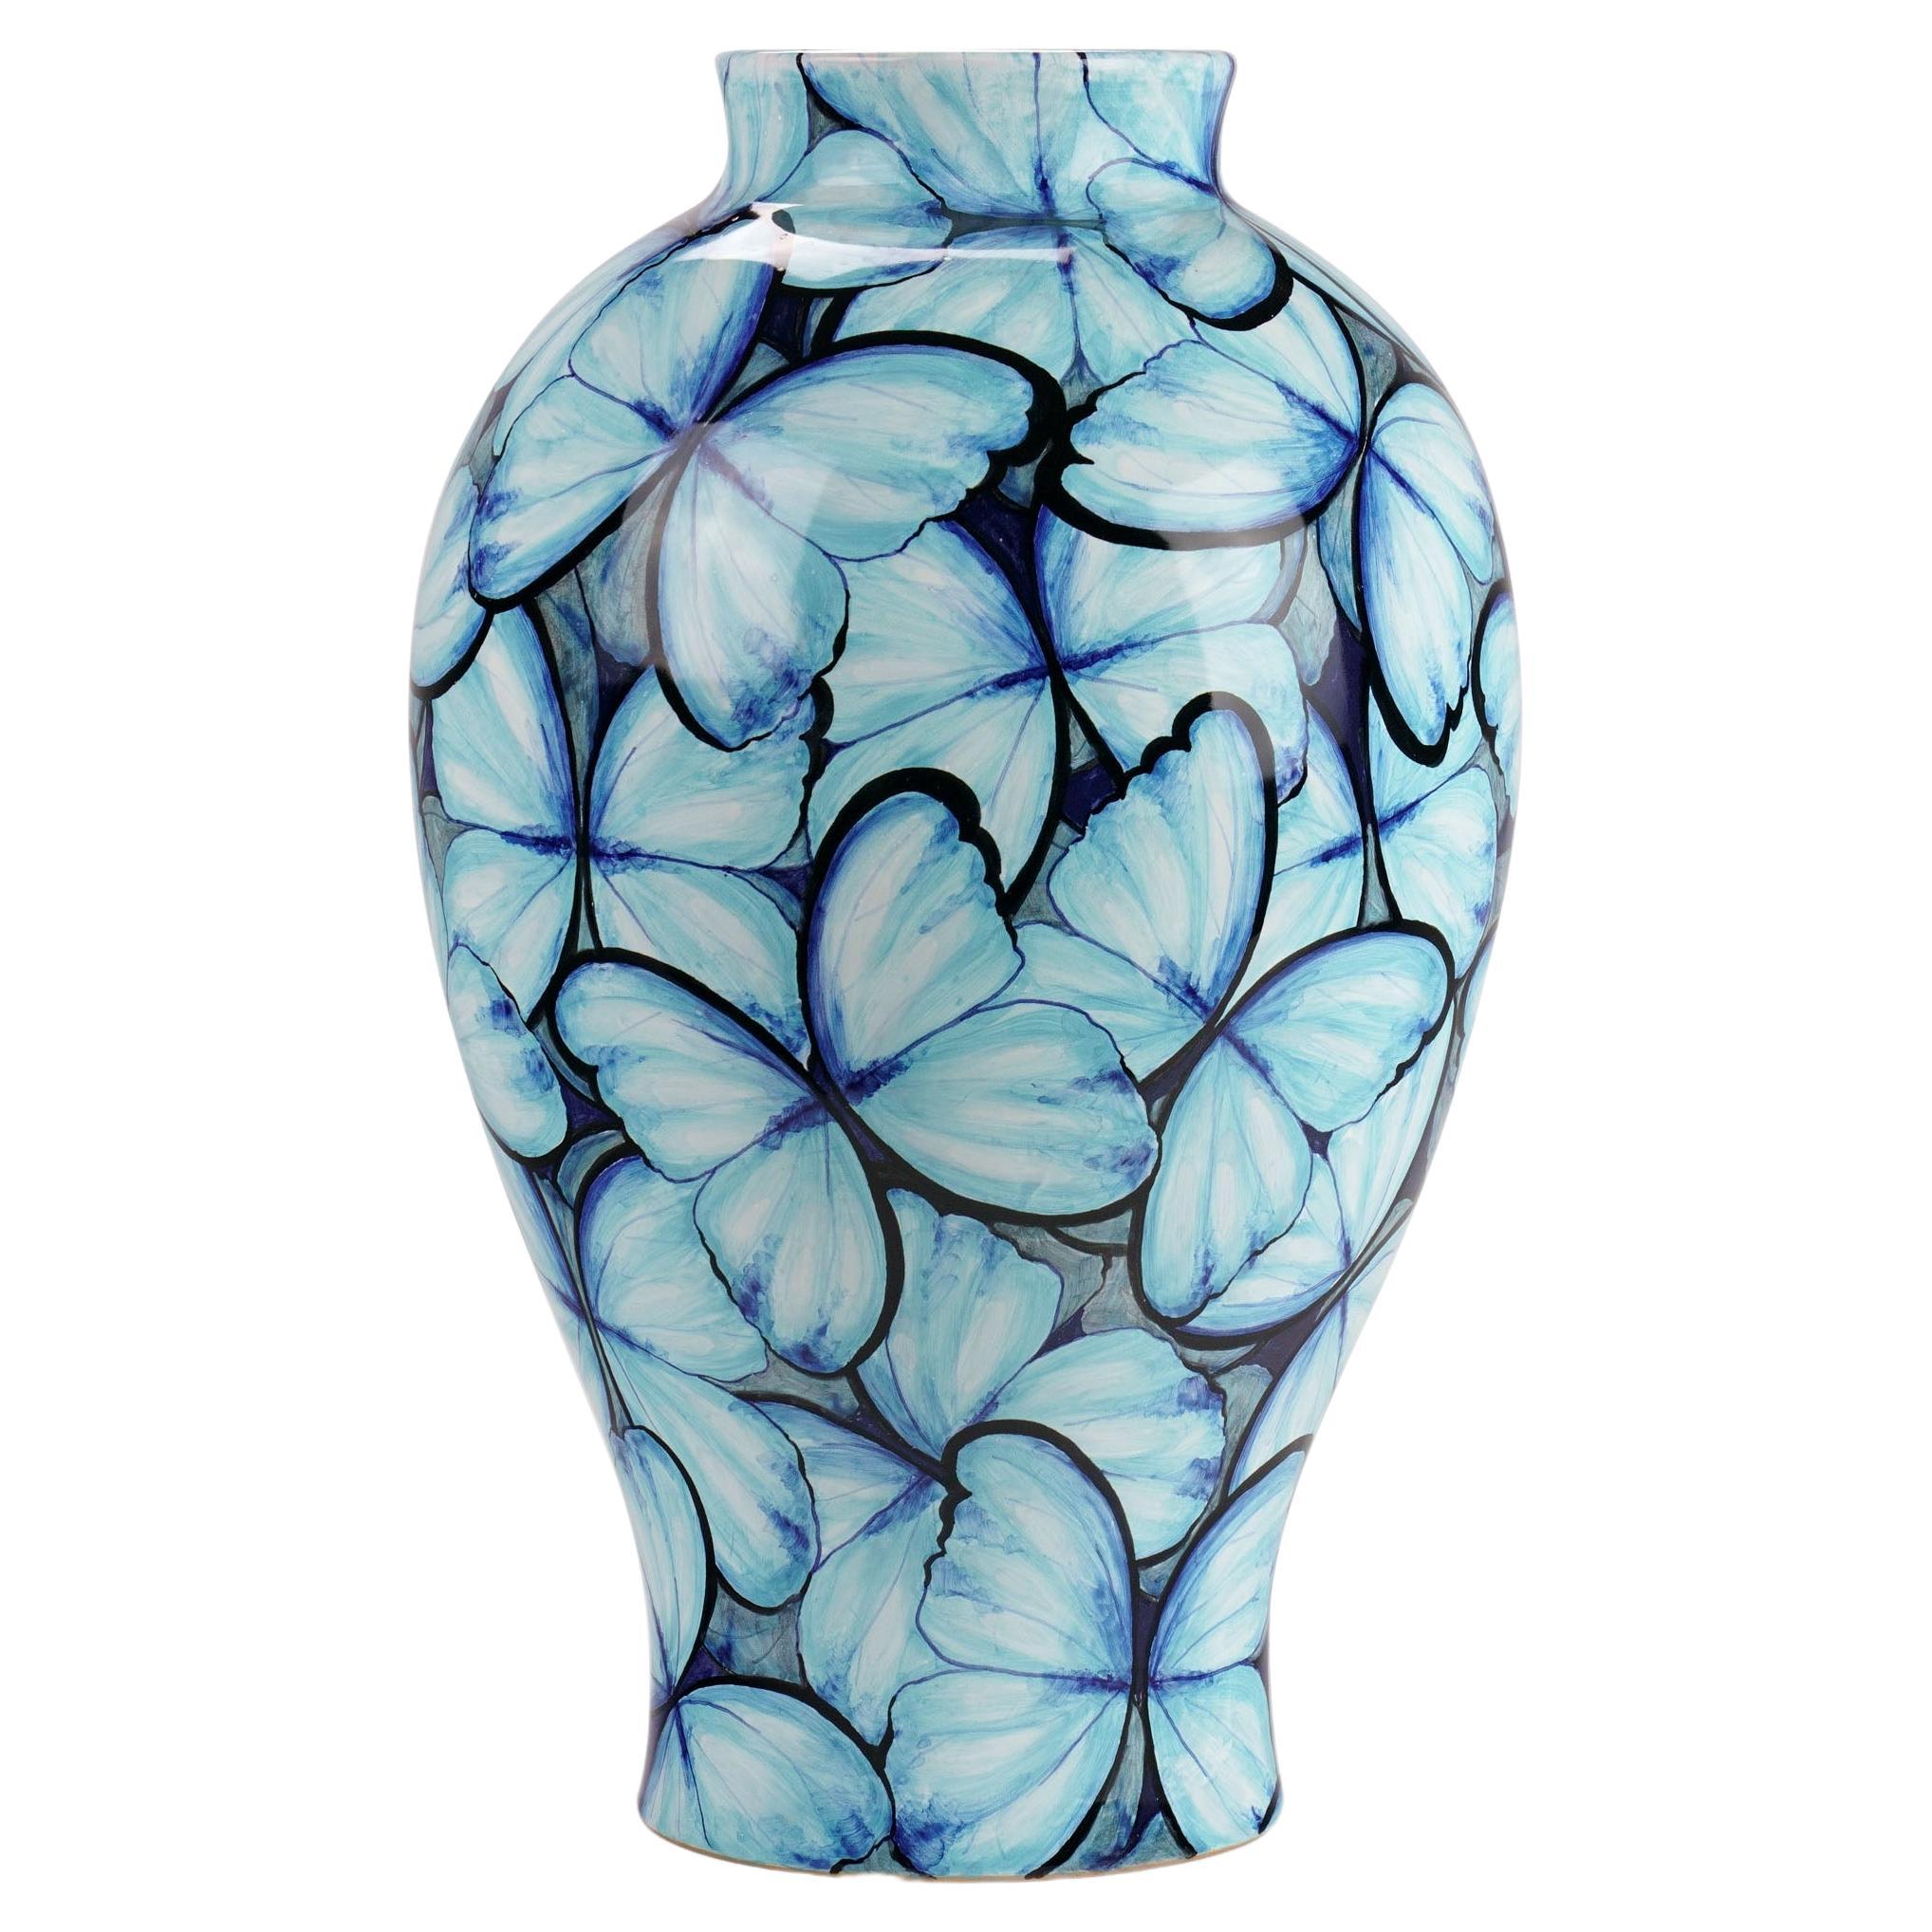 Blaue Majolika-Vase/Gefäß aus Keramik mit dekorativen Schmetterlingen, handbemalt, Italien